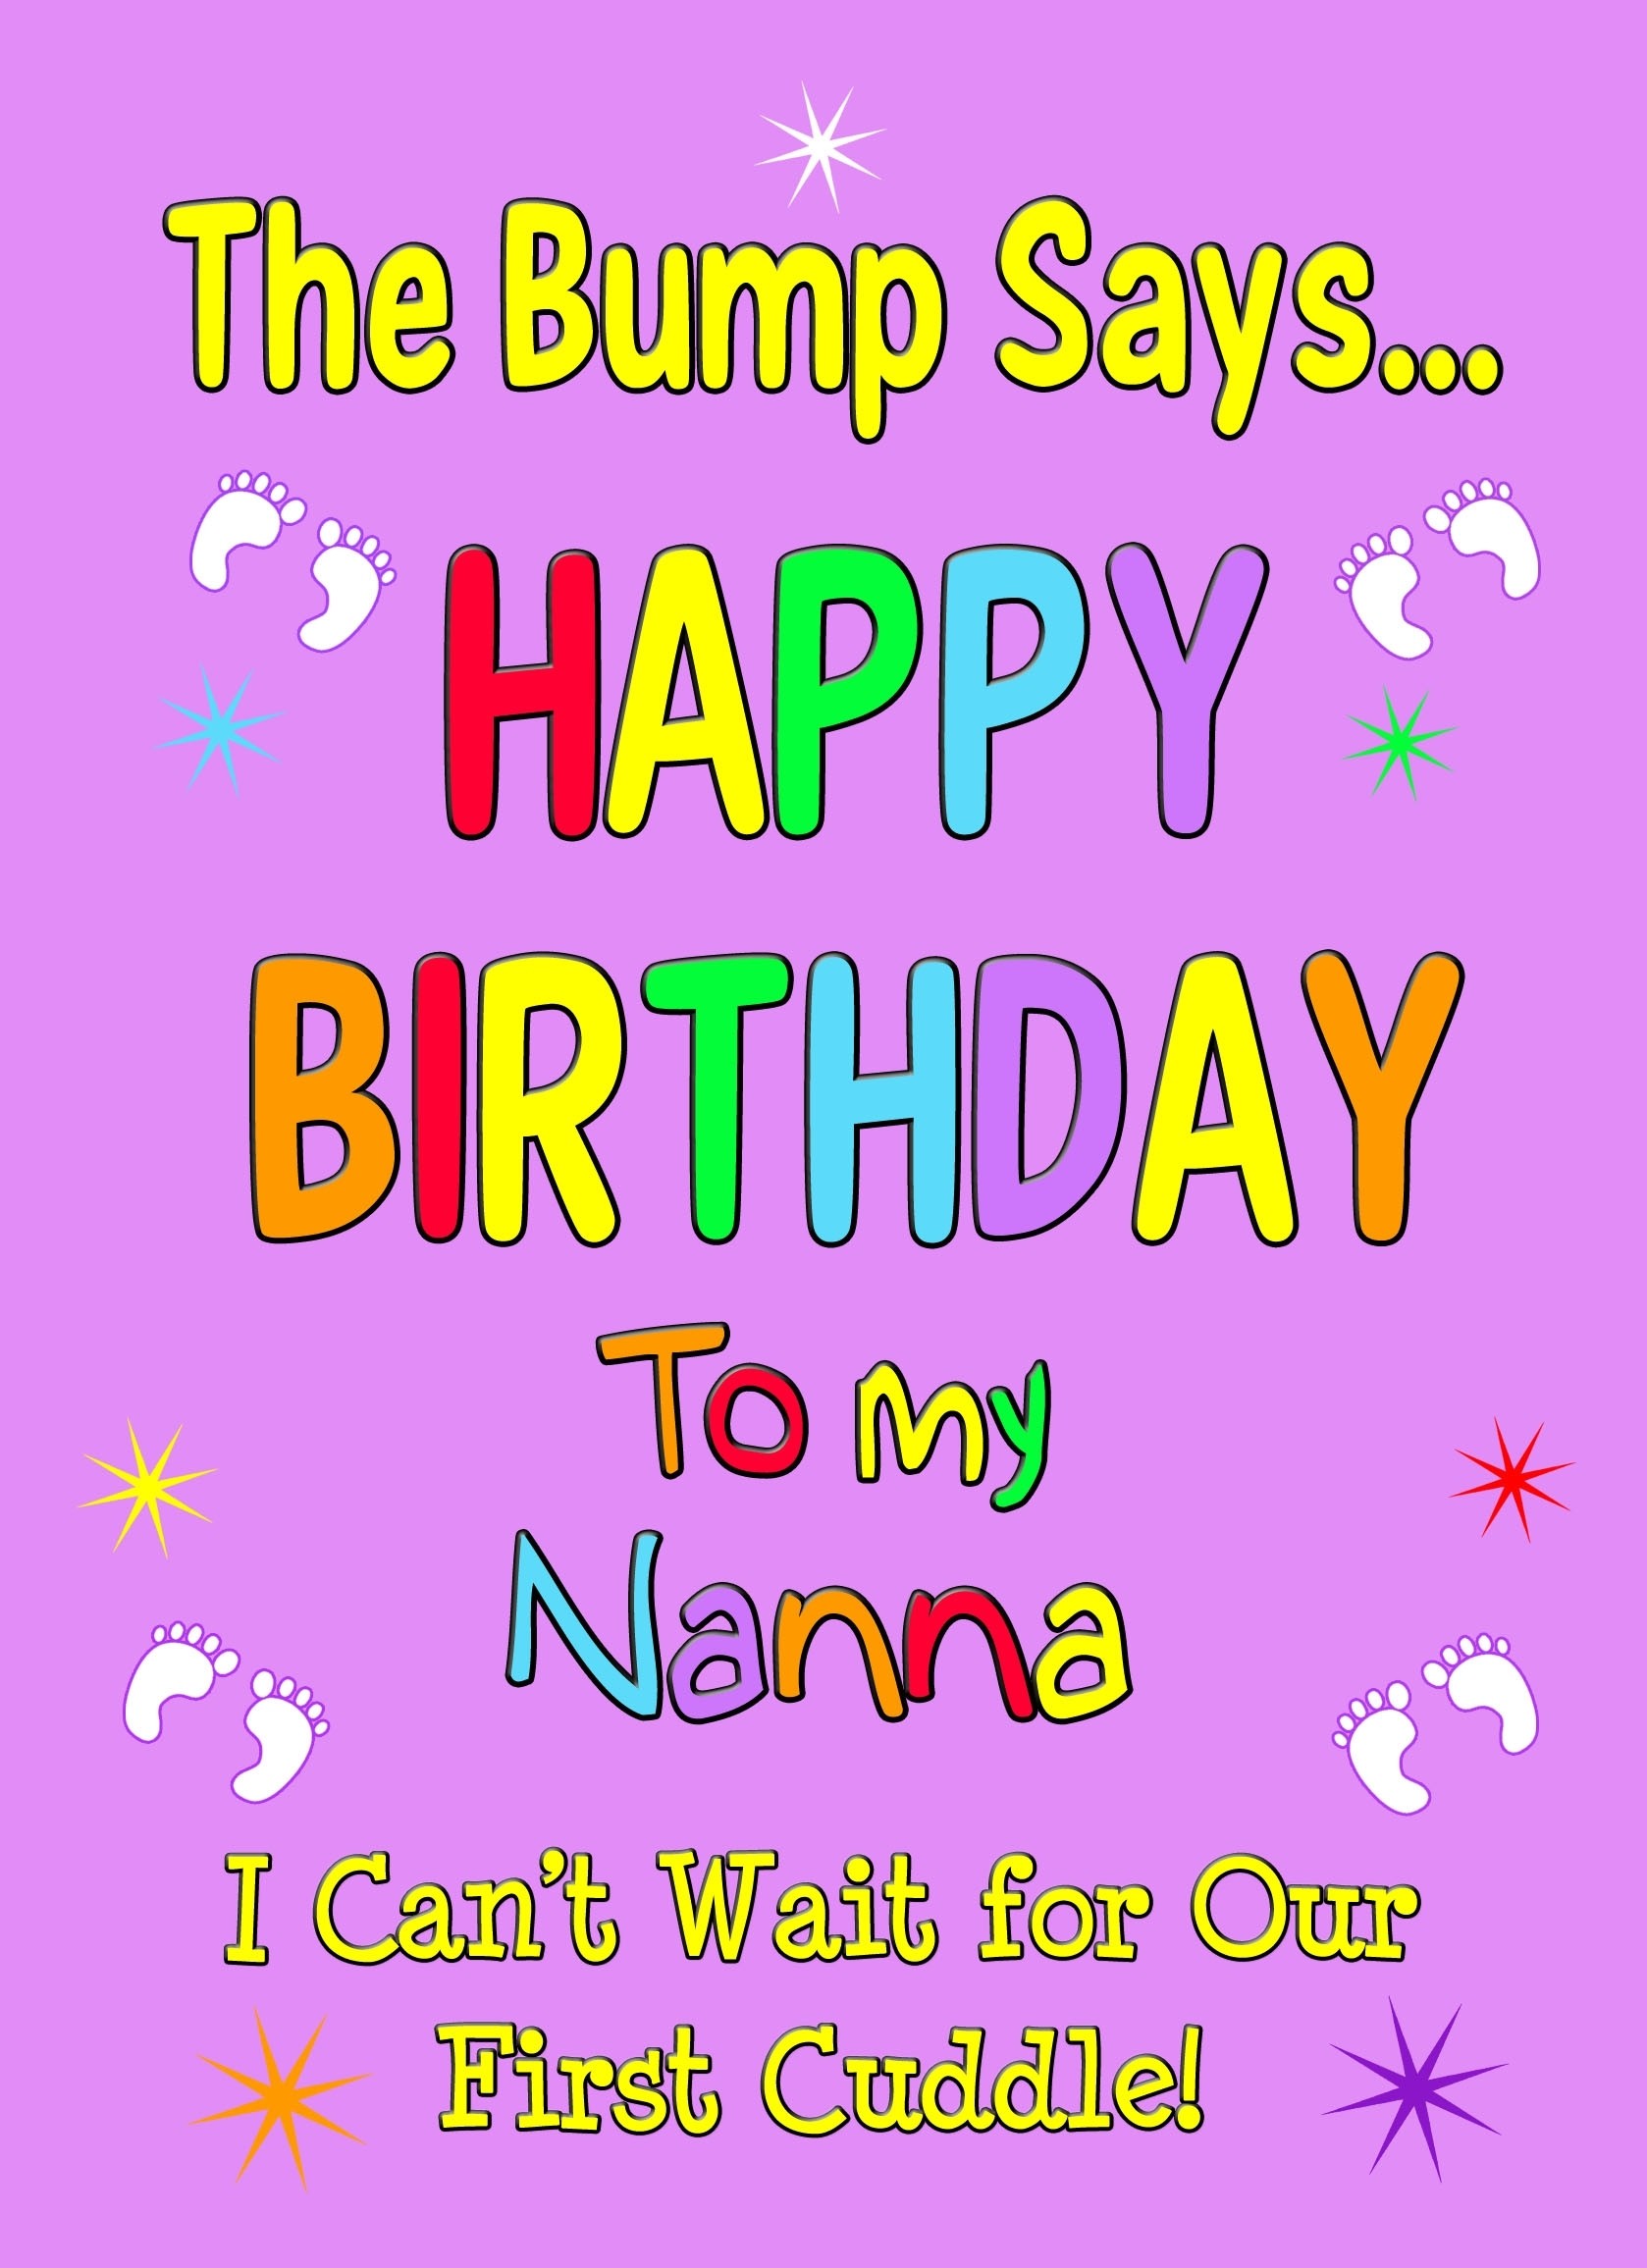 From The Bump Pregnancy Birthday Card (Nanna, Purple)